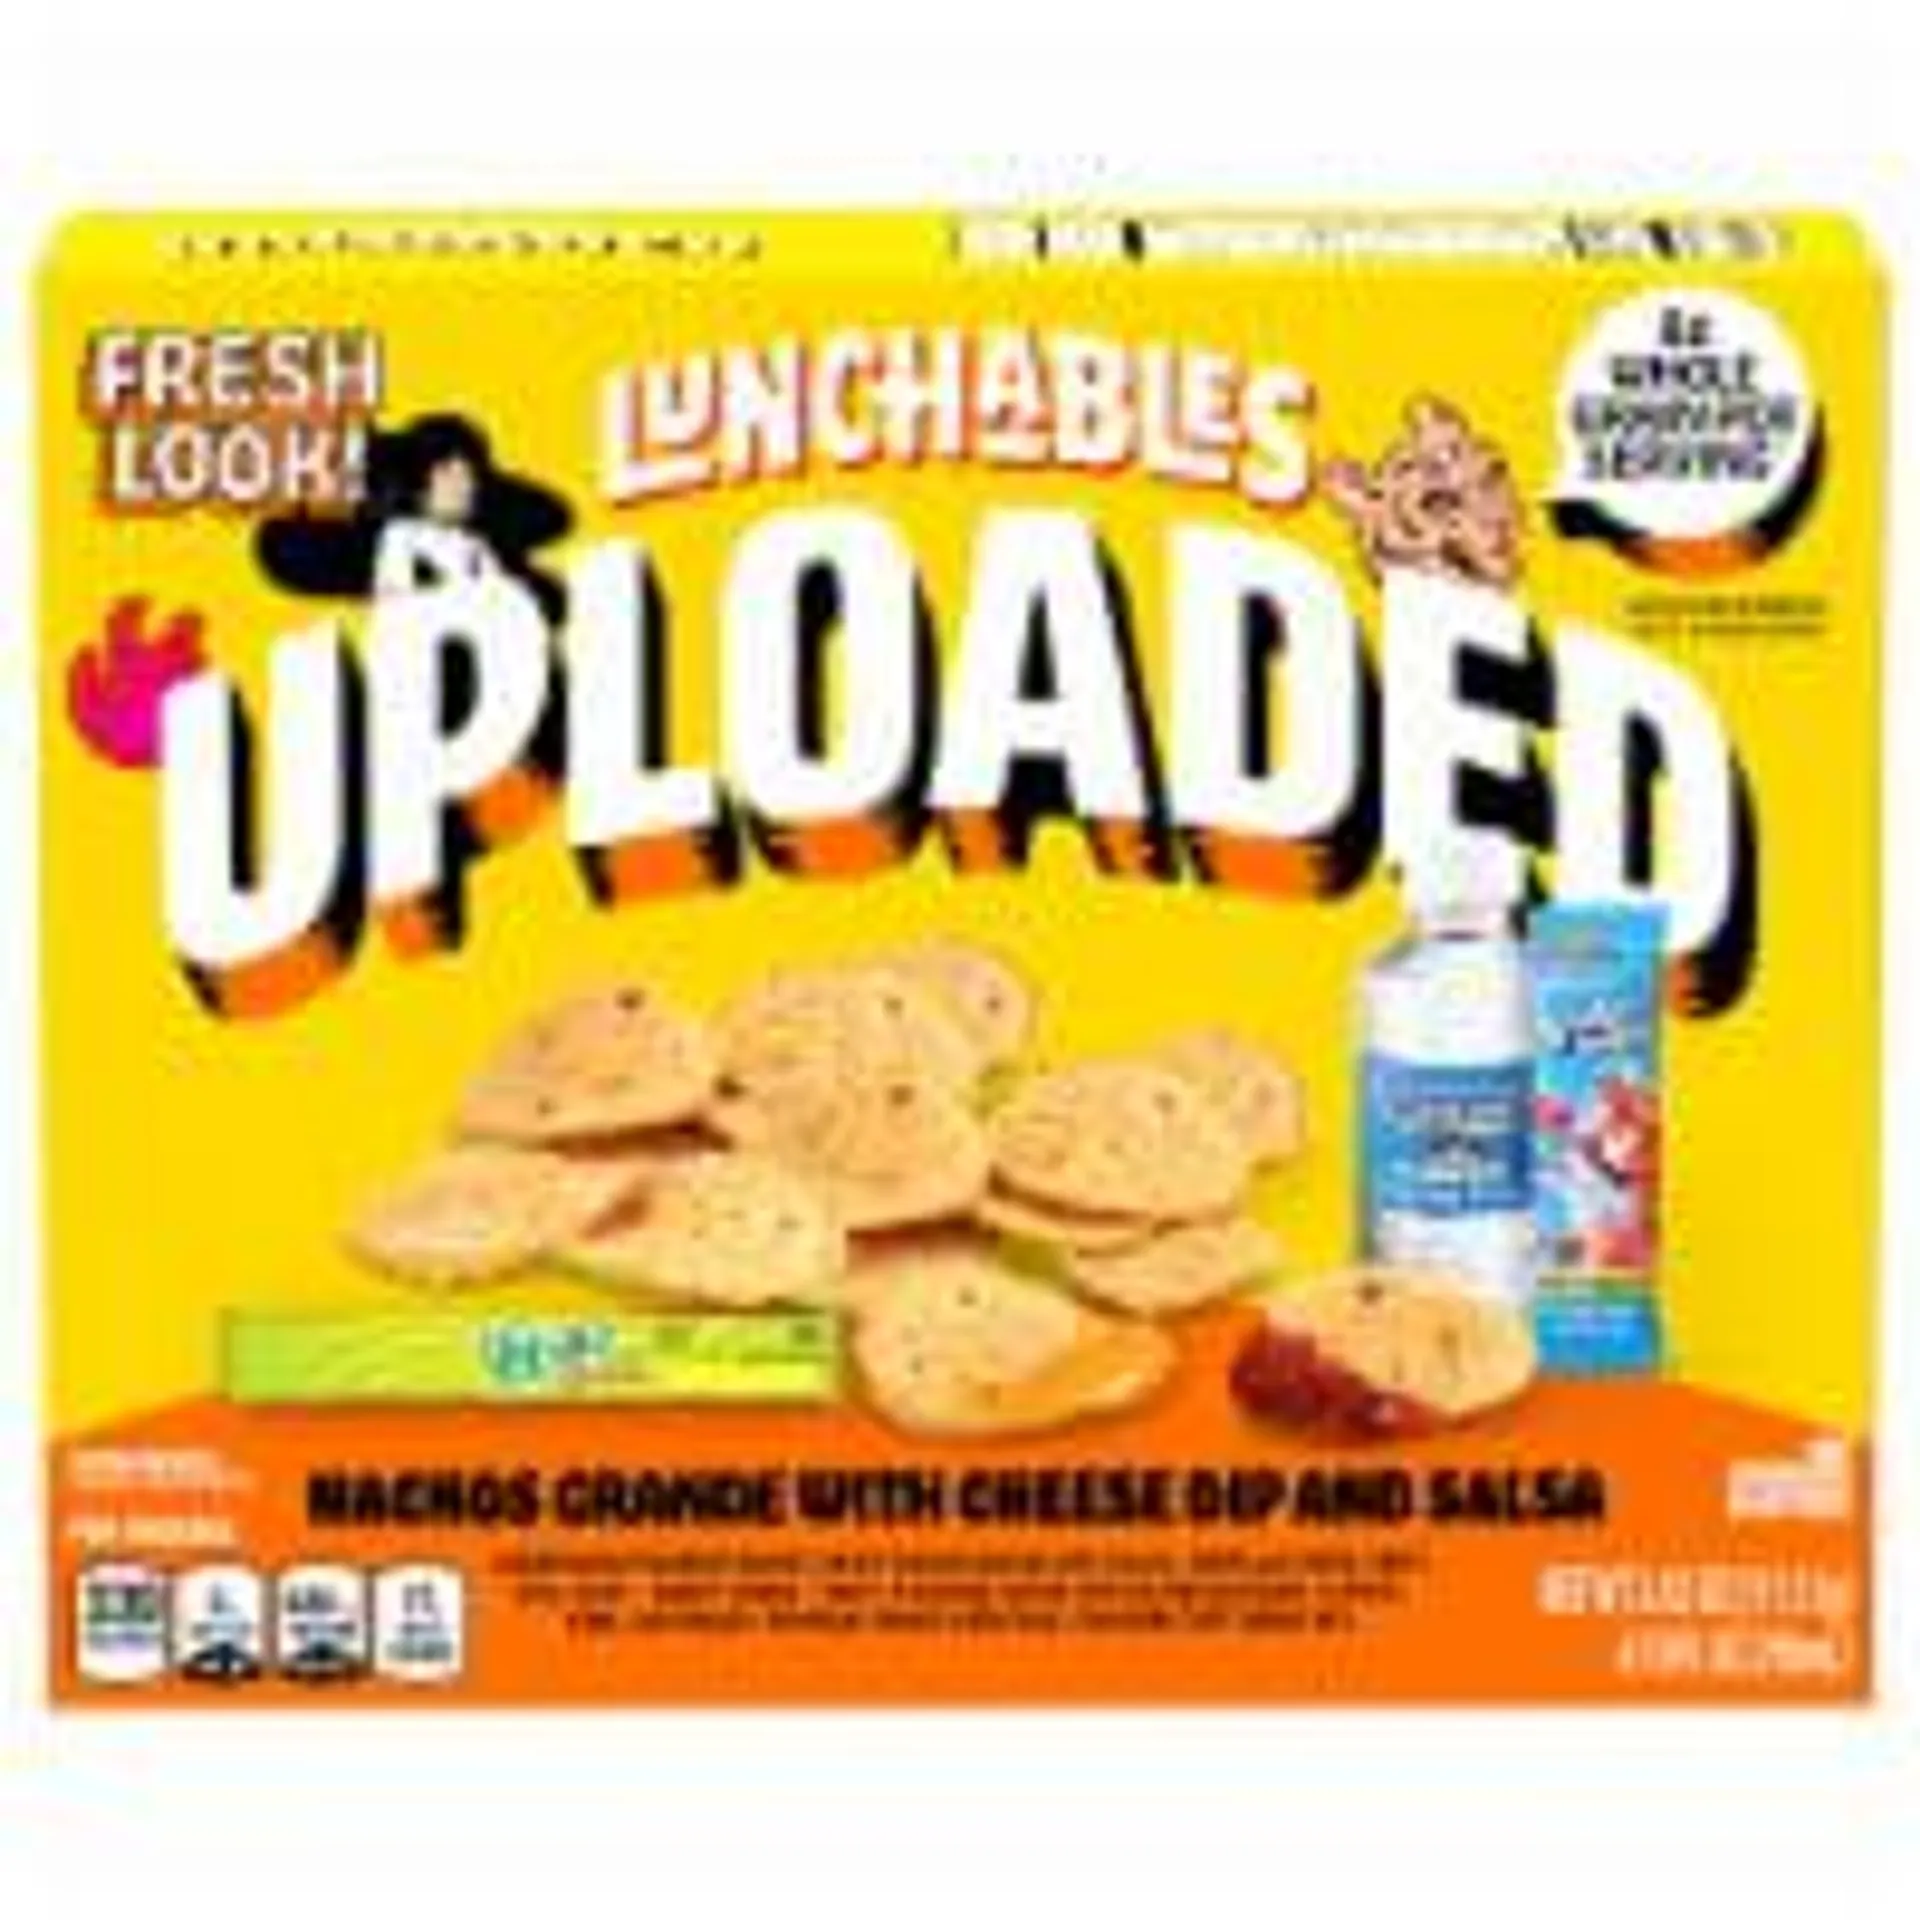 Lunchables Uploaded Nachos Grande Meal Kit Box